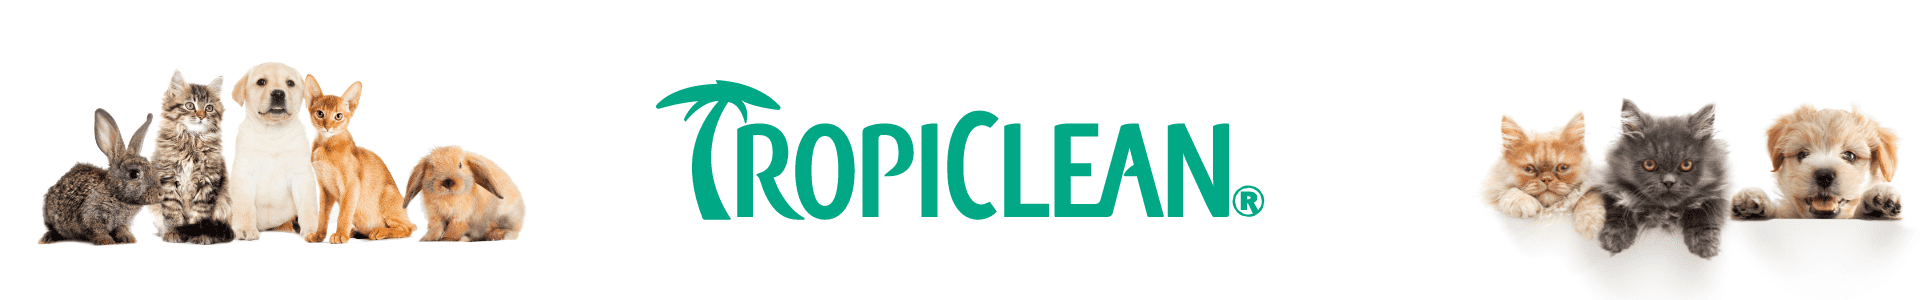 tropiclean-brand